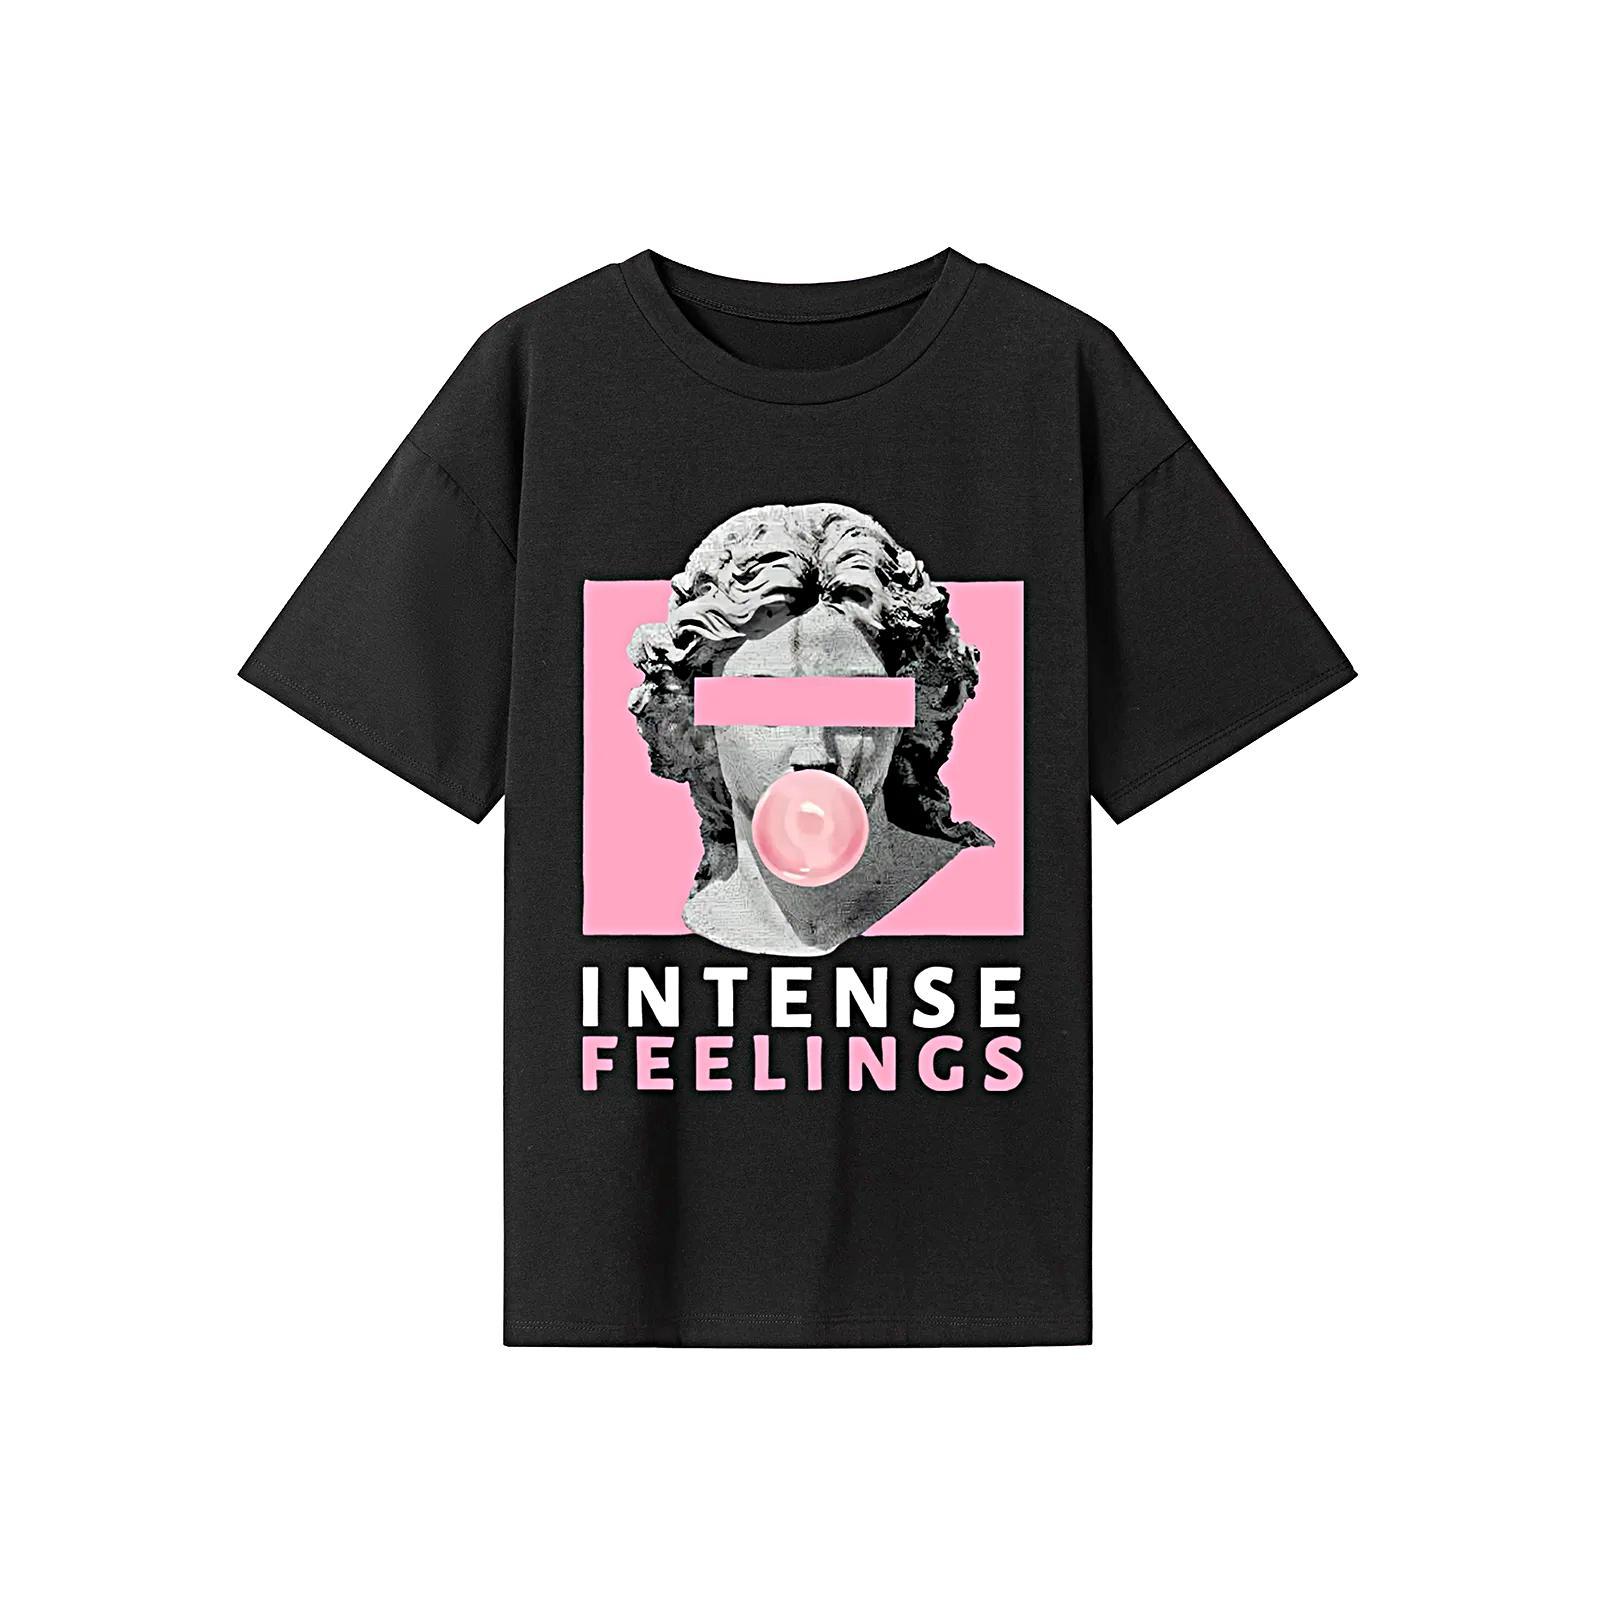 T Shirt for Women Summer Comfortable Soft Basic Tee for Beach Hiking Walking S